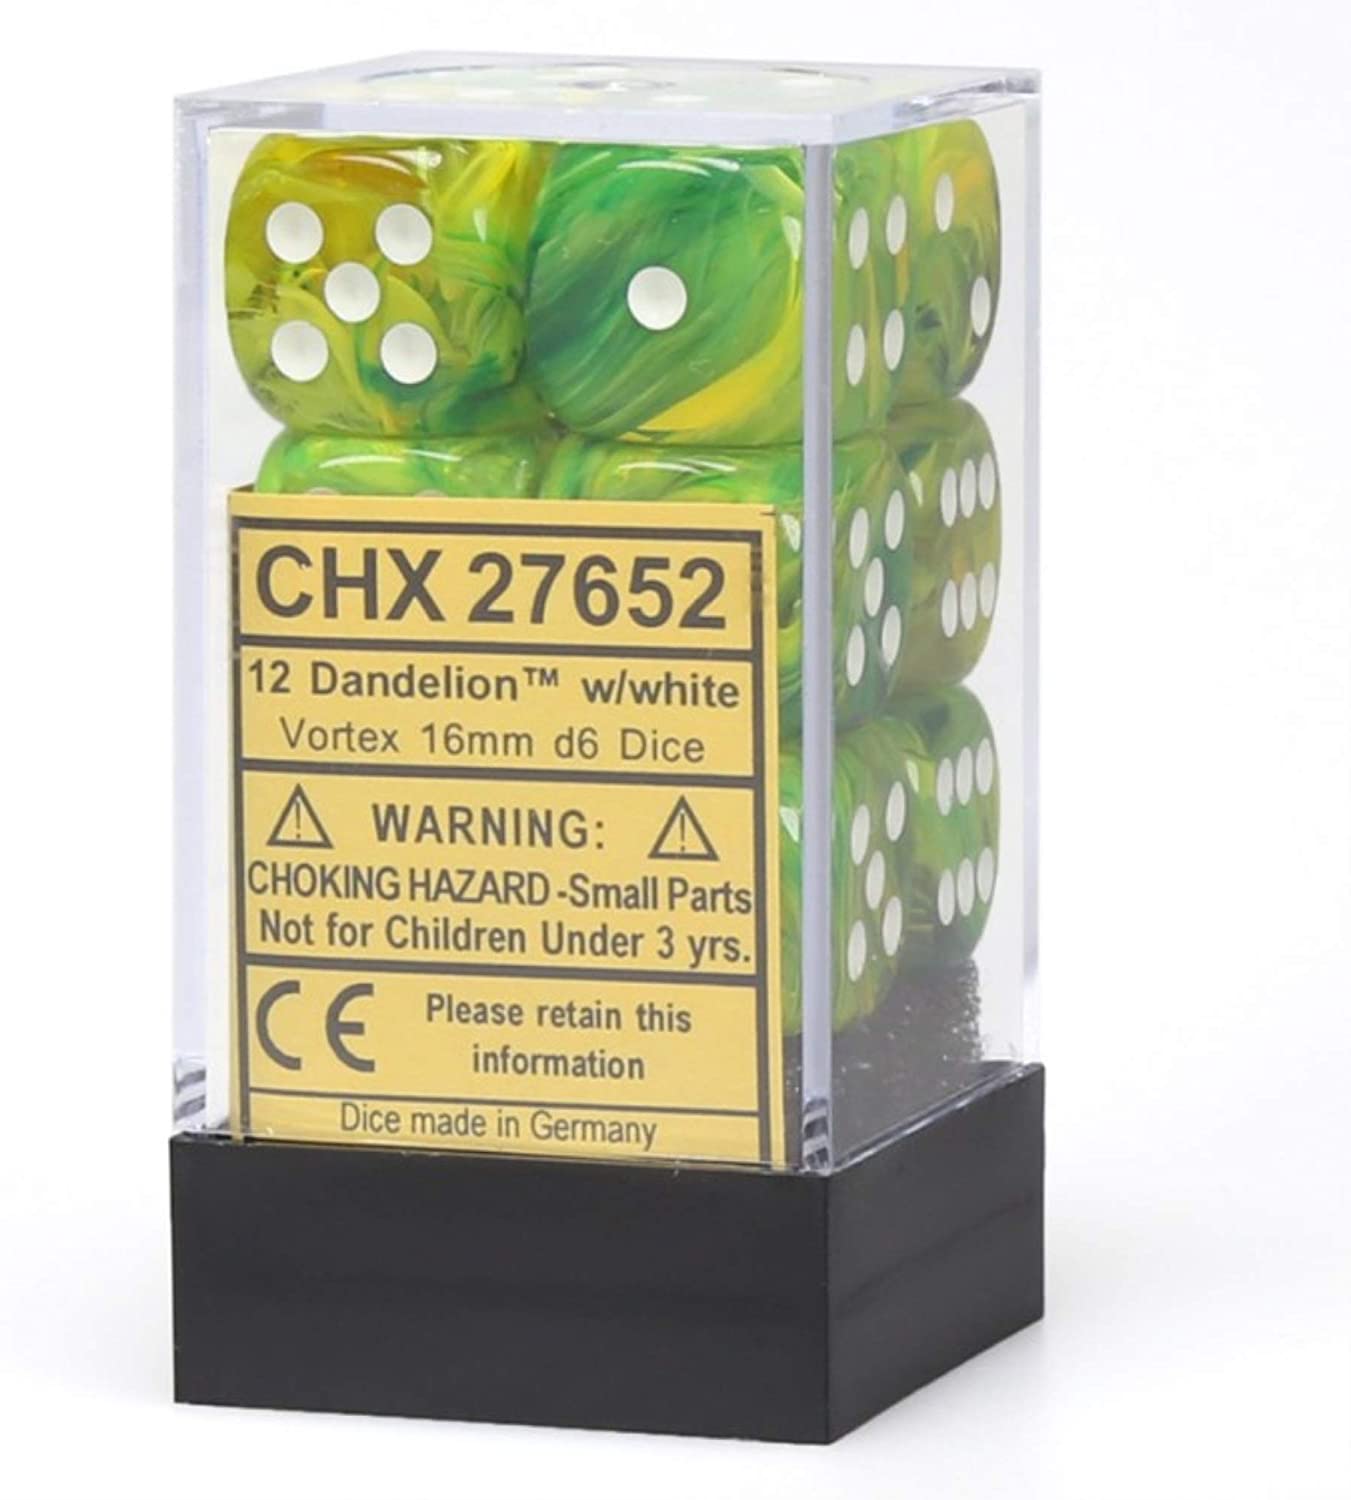 Chessex Dice: D6 Block 16mm - Vortex - Dandy with White (CHX 27652) - Gamescape